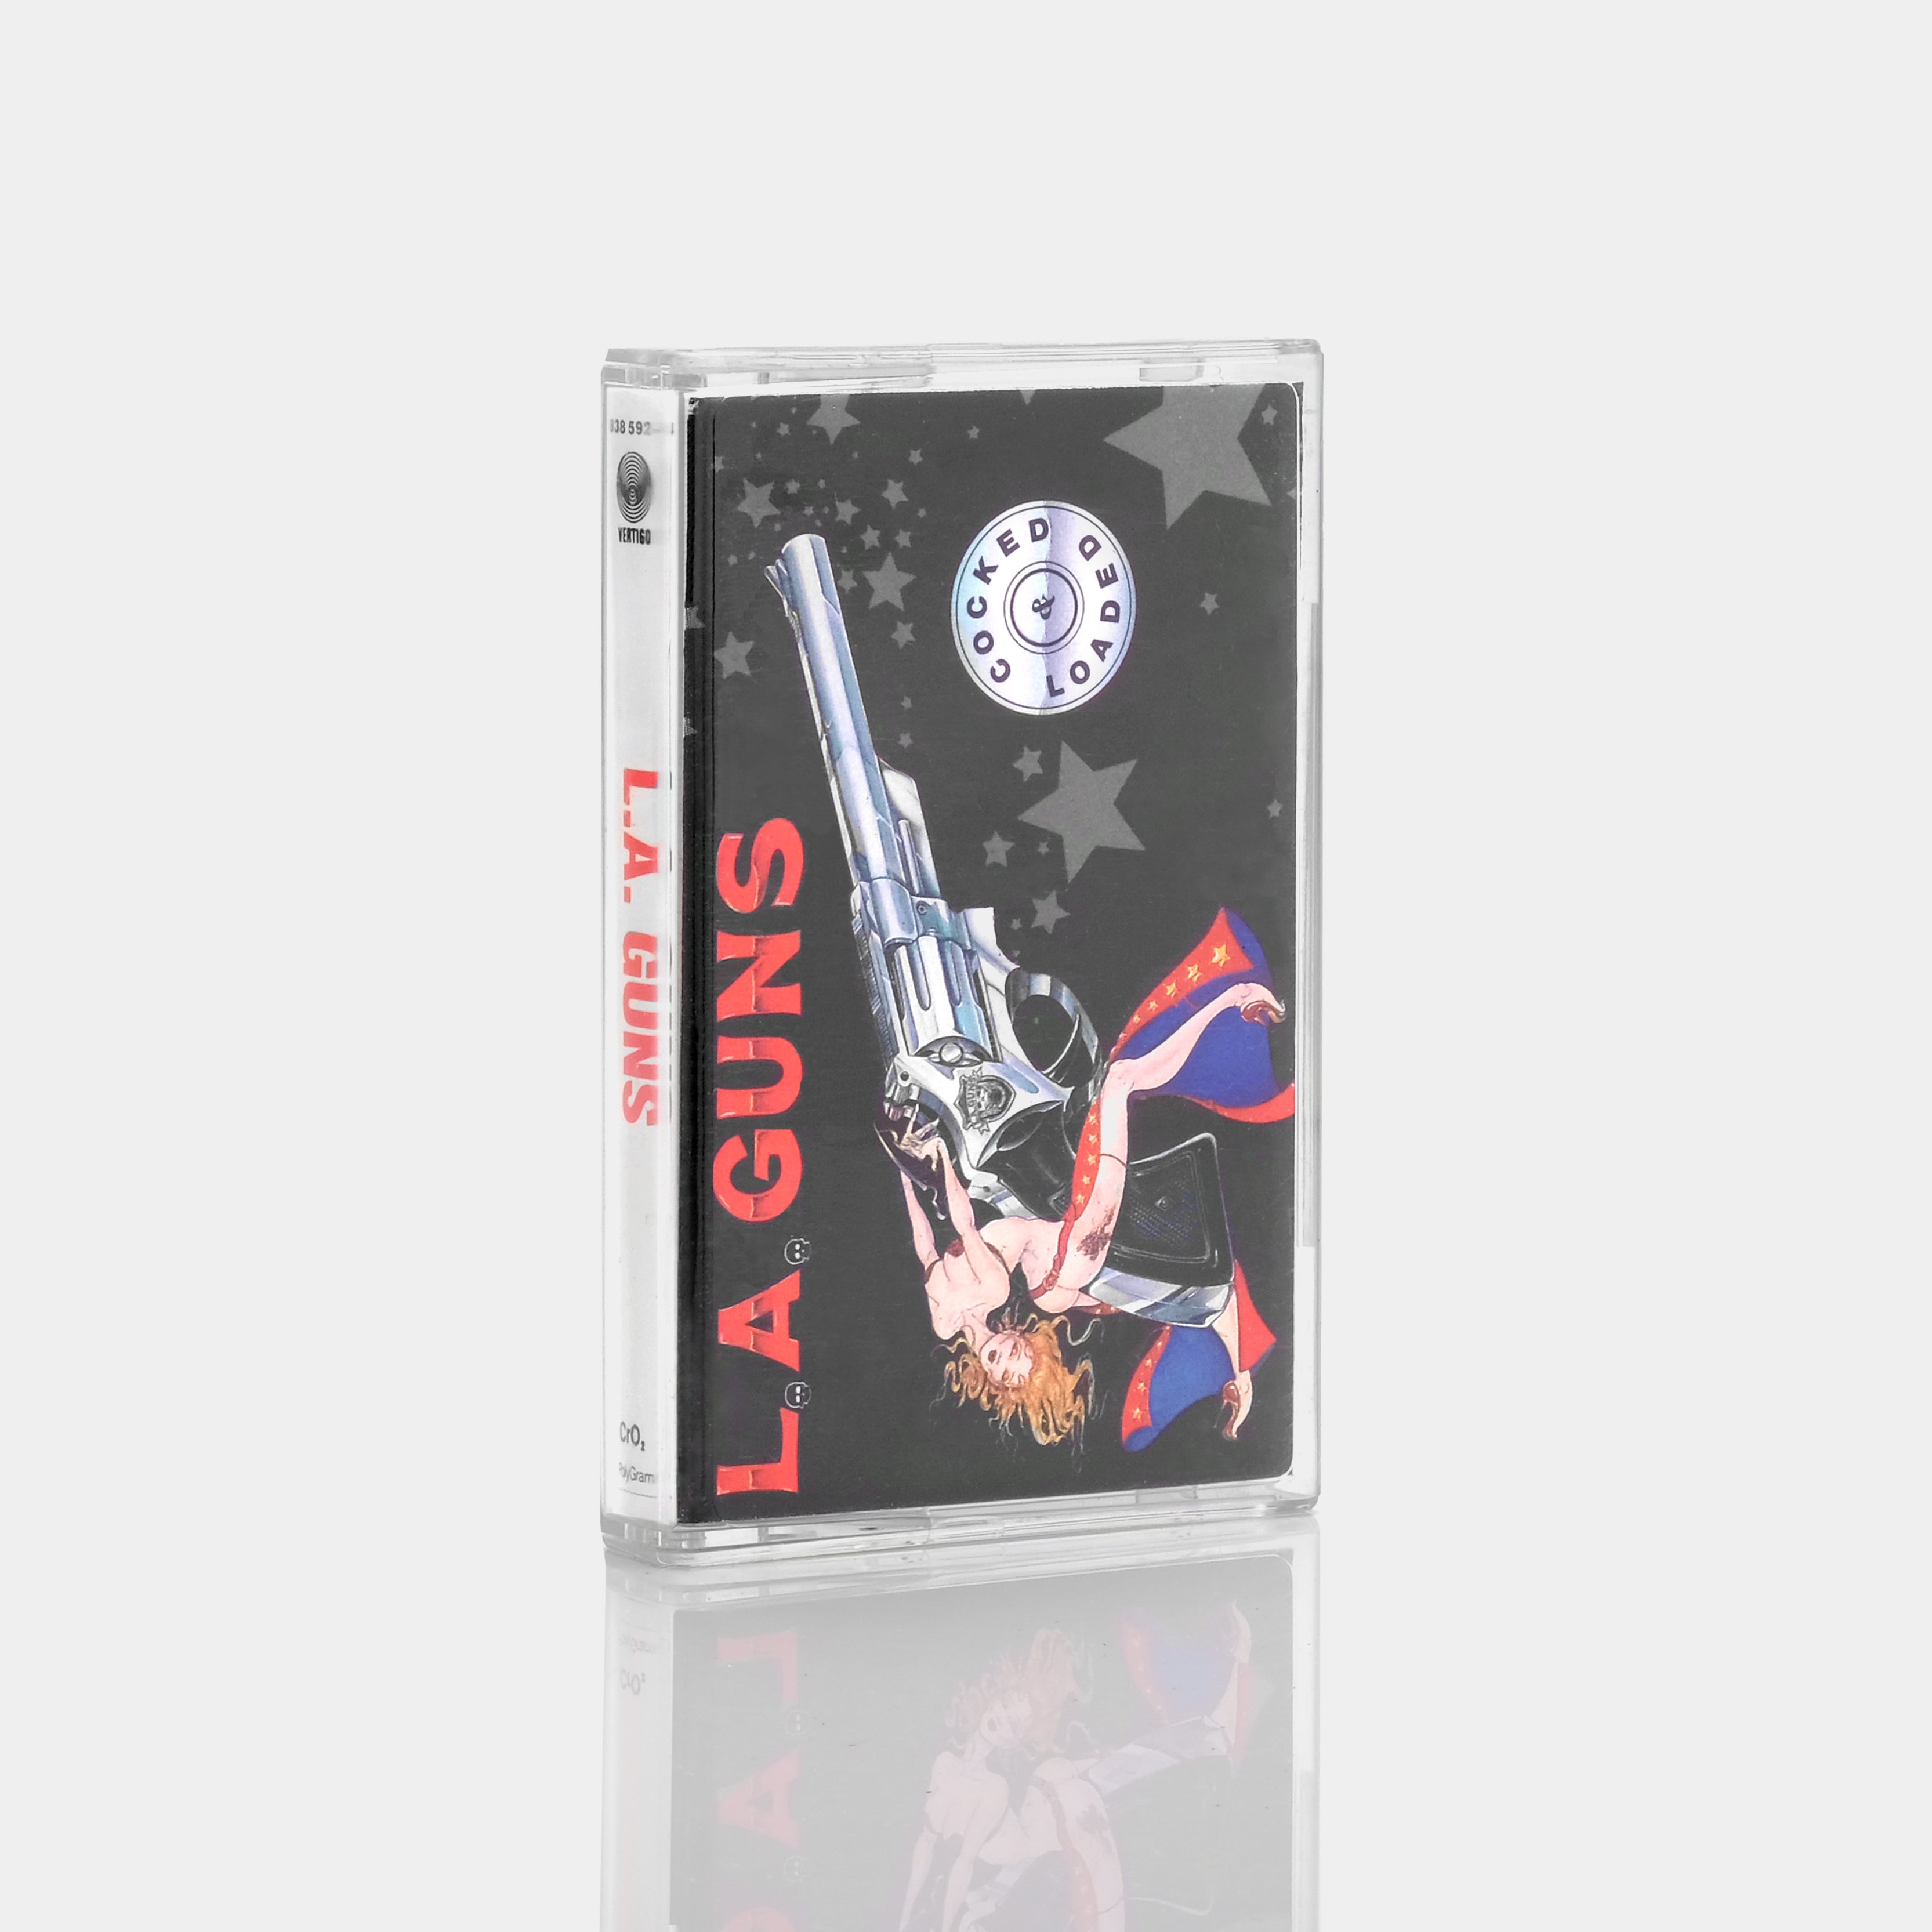 L.A. Guns - Cocked & Loaded Cassette Tape